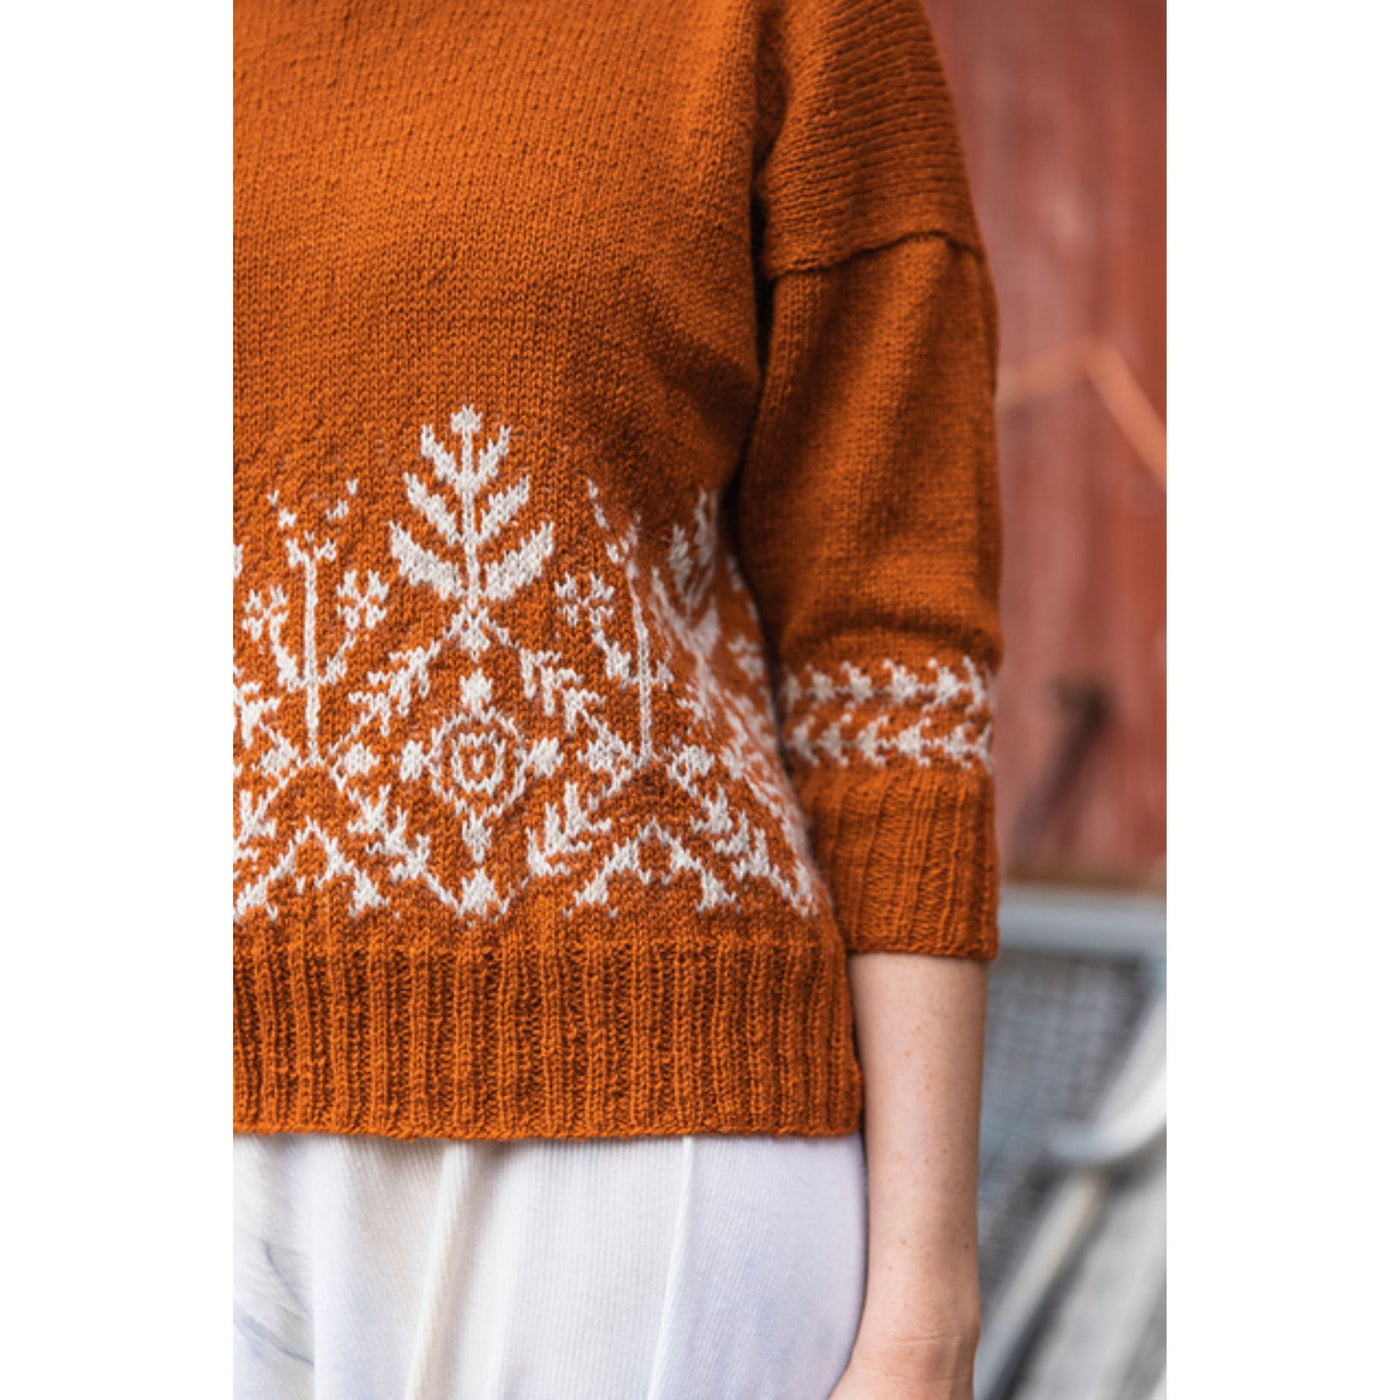 Suolaulu Sweater Yarn Set in Finullgarn from Knitted Kalevala